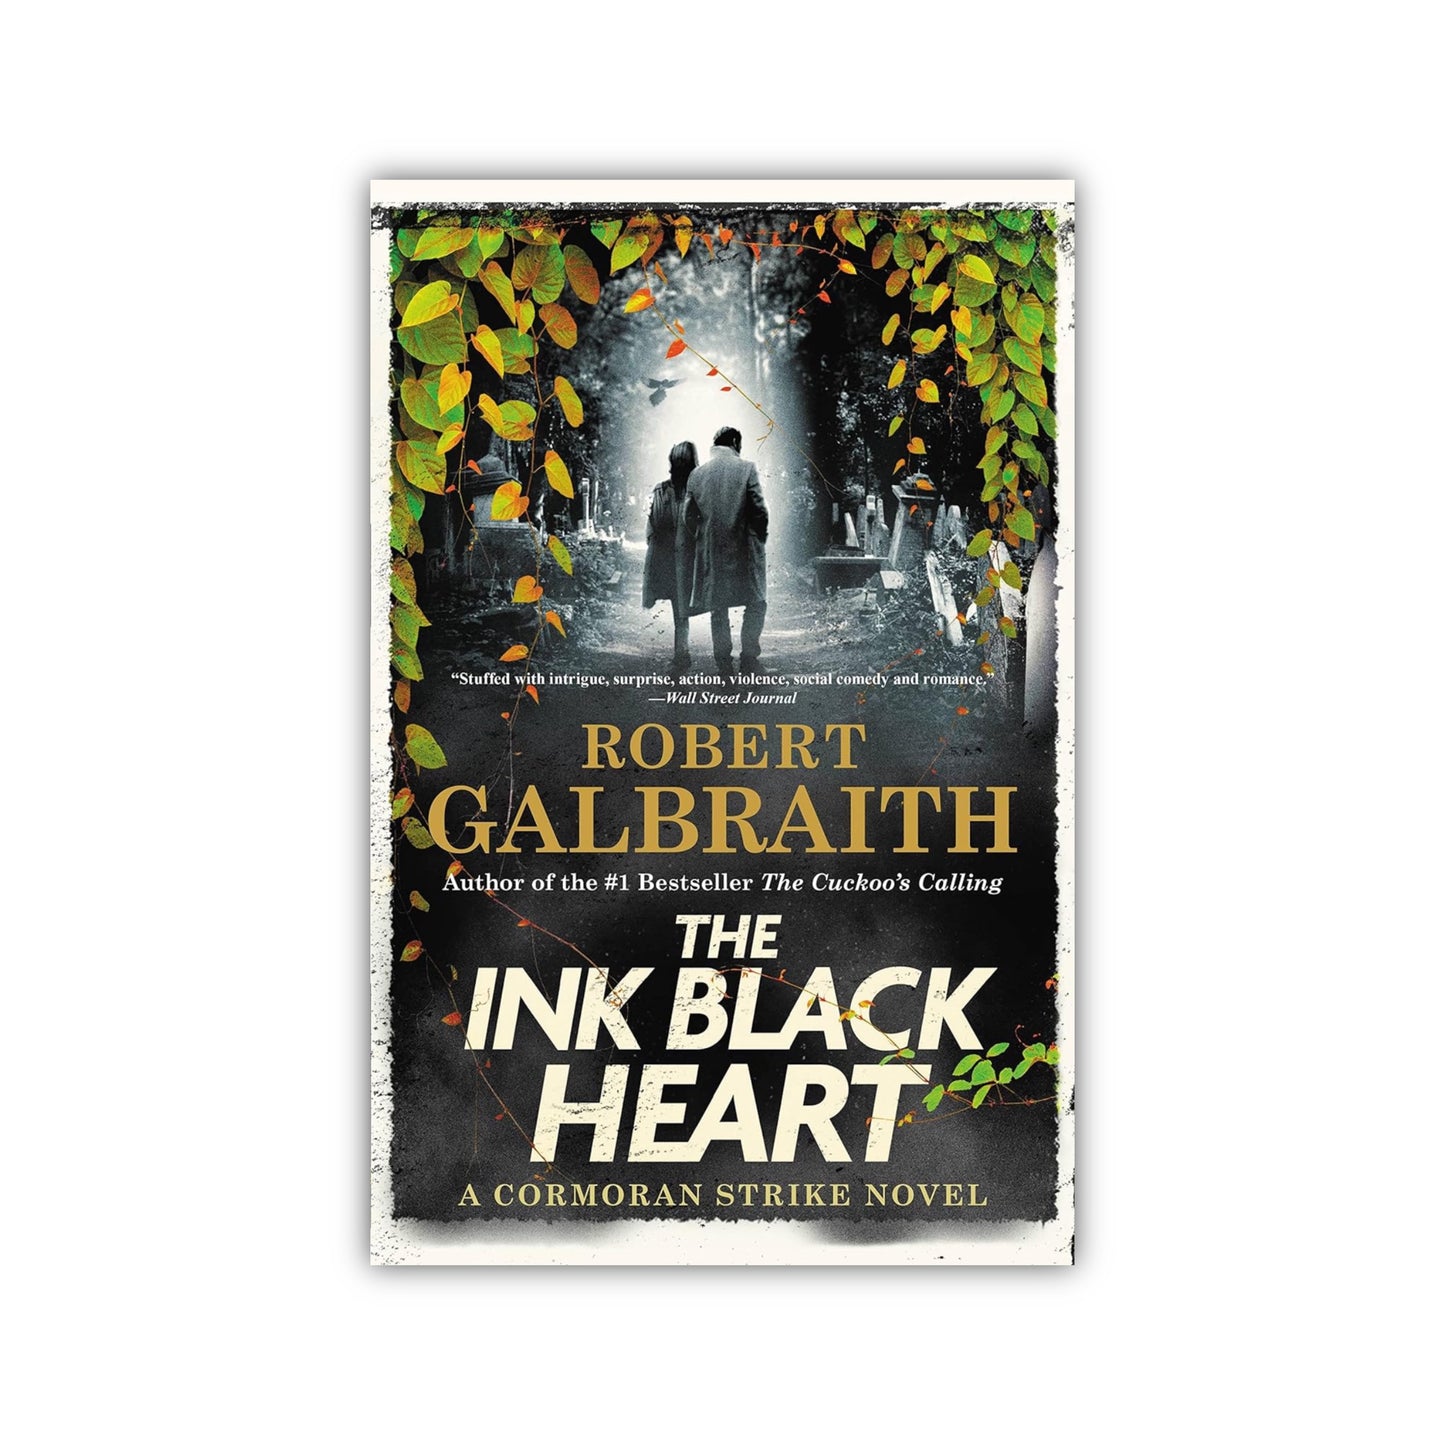 The Ink Black Heart (Cormoran Strike) by Robert Galbraith